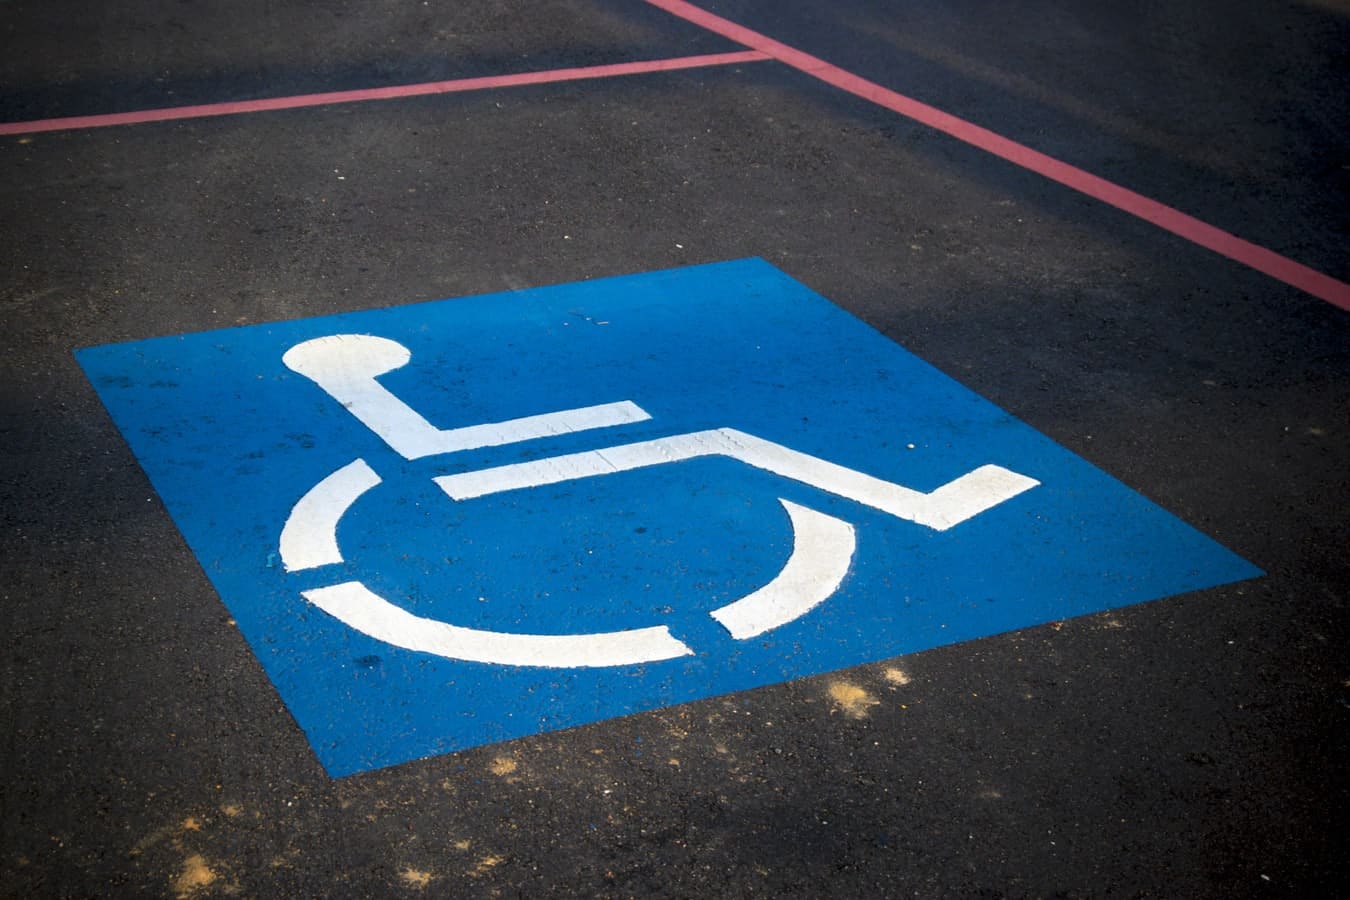 Handicap parking sign on pavement